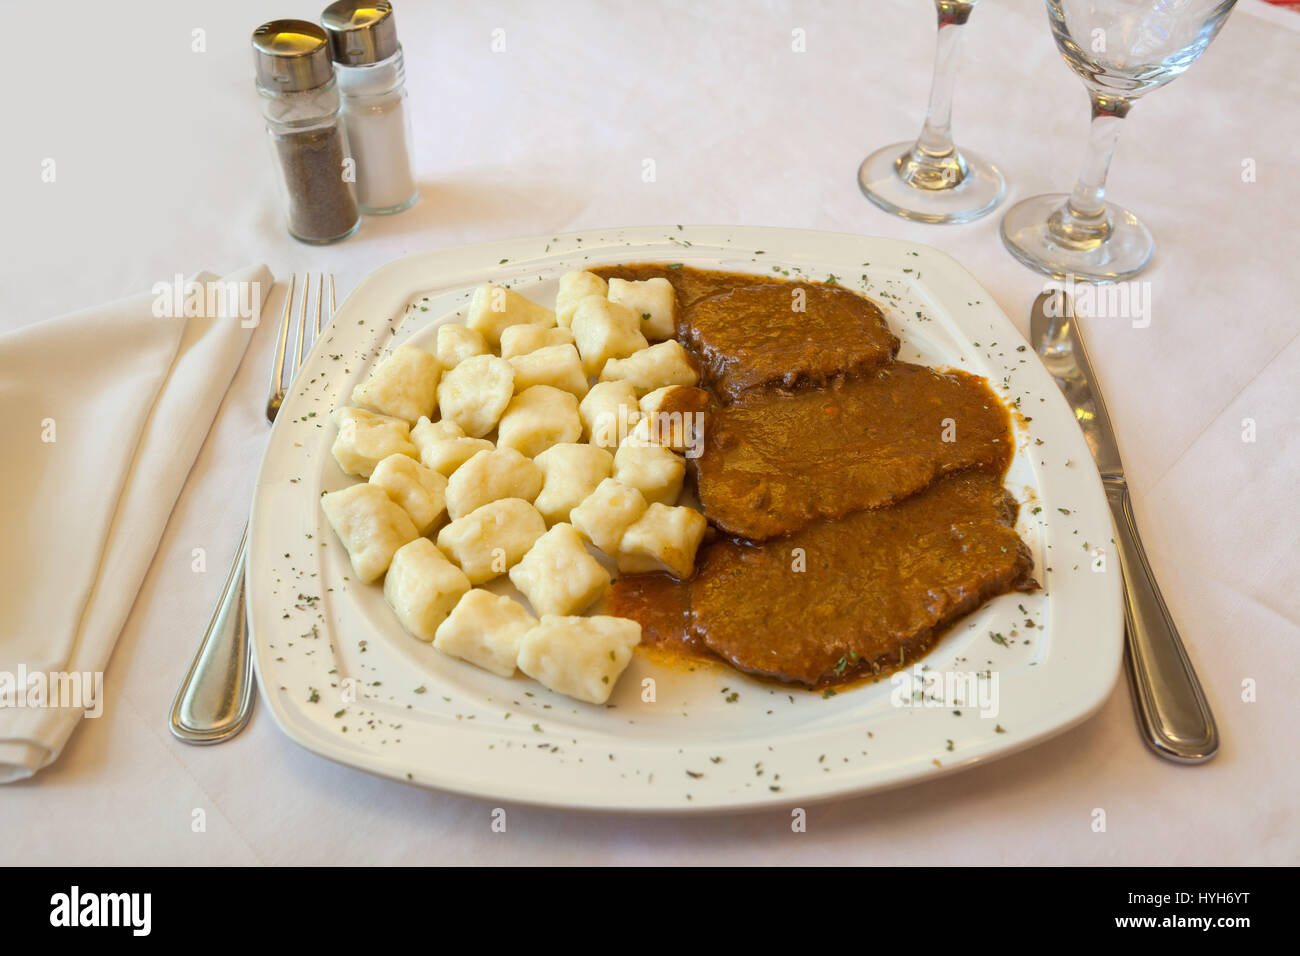 Croatian traditional cuisine, Pasticada With Gnocchi - Dalmatian Pot Roast or beef stew Stock Photo